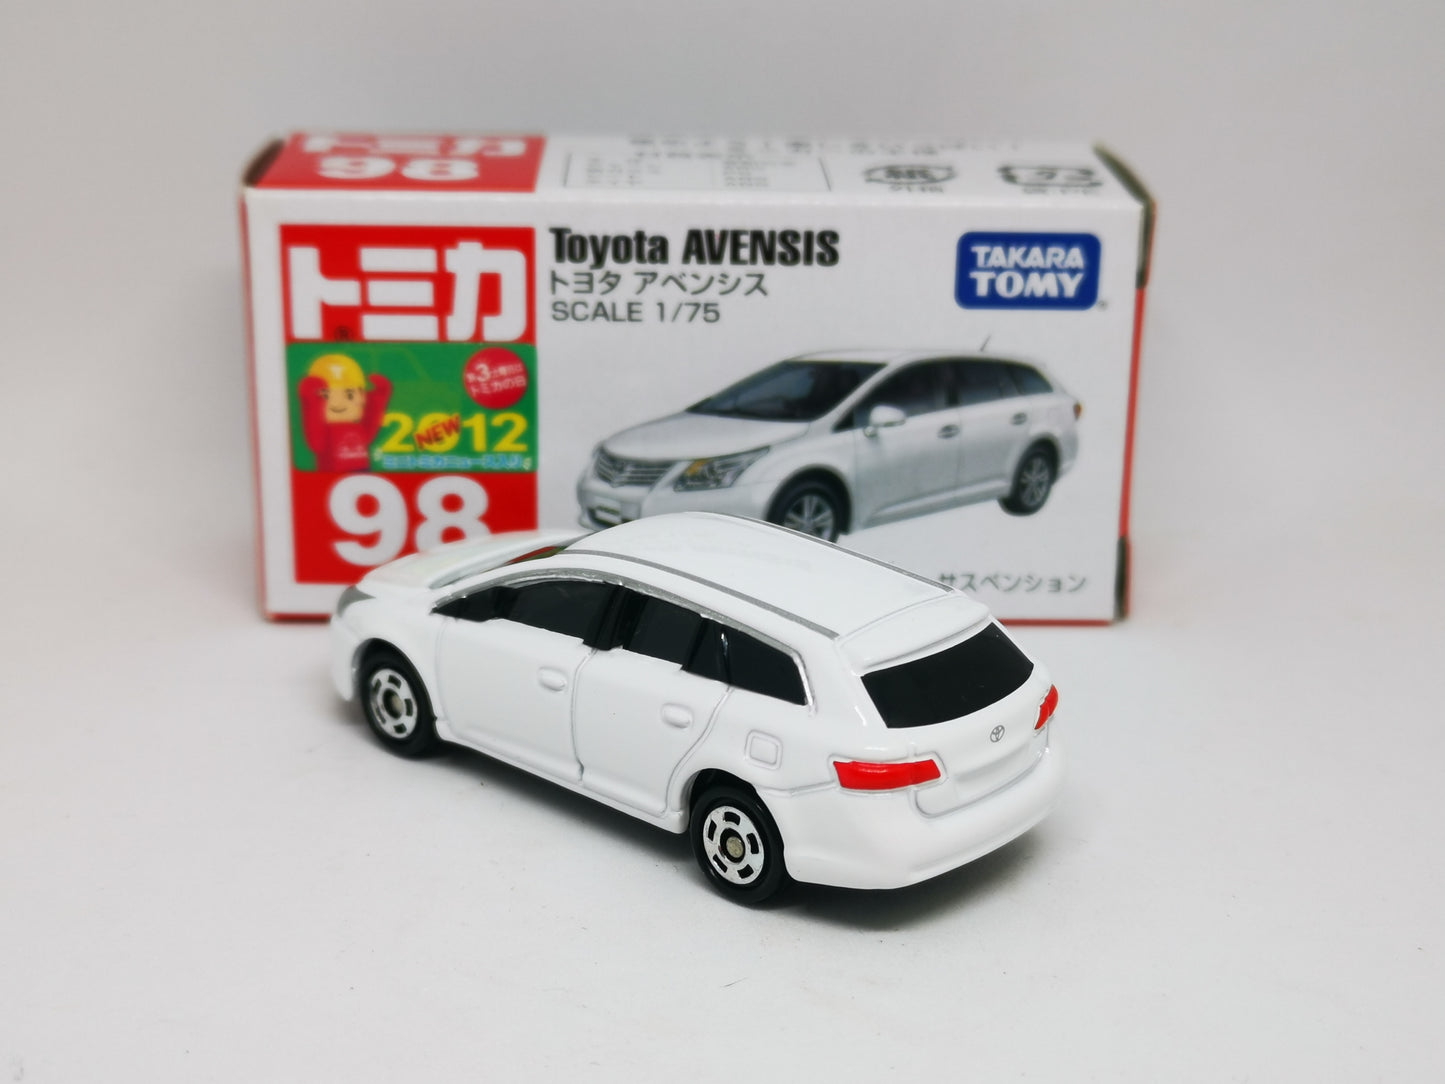 Tomica #98 Toyota Avensis